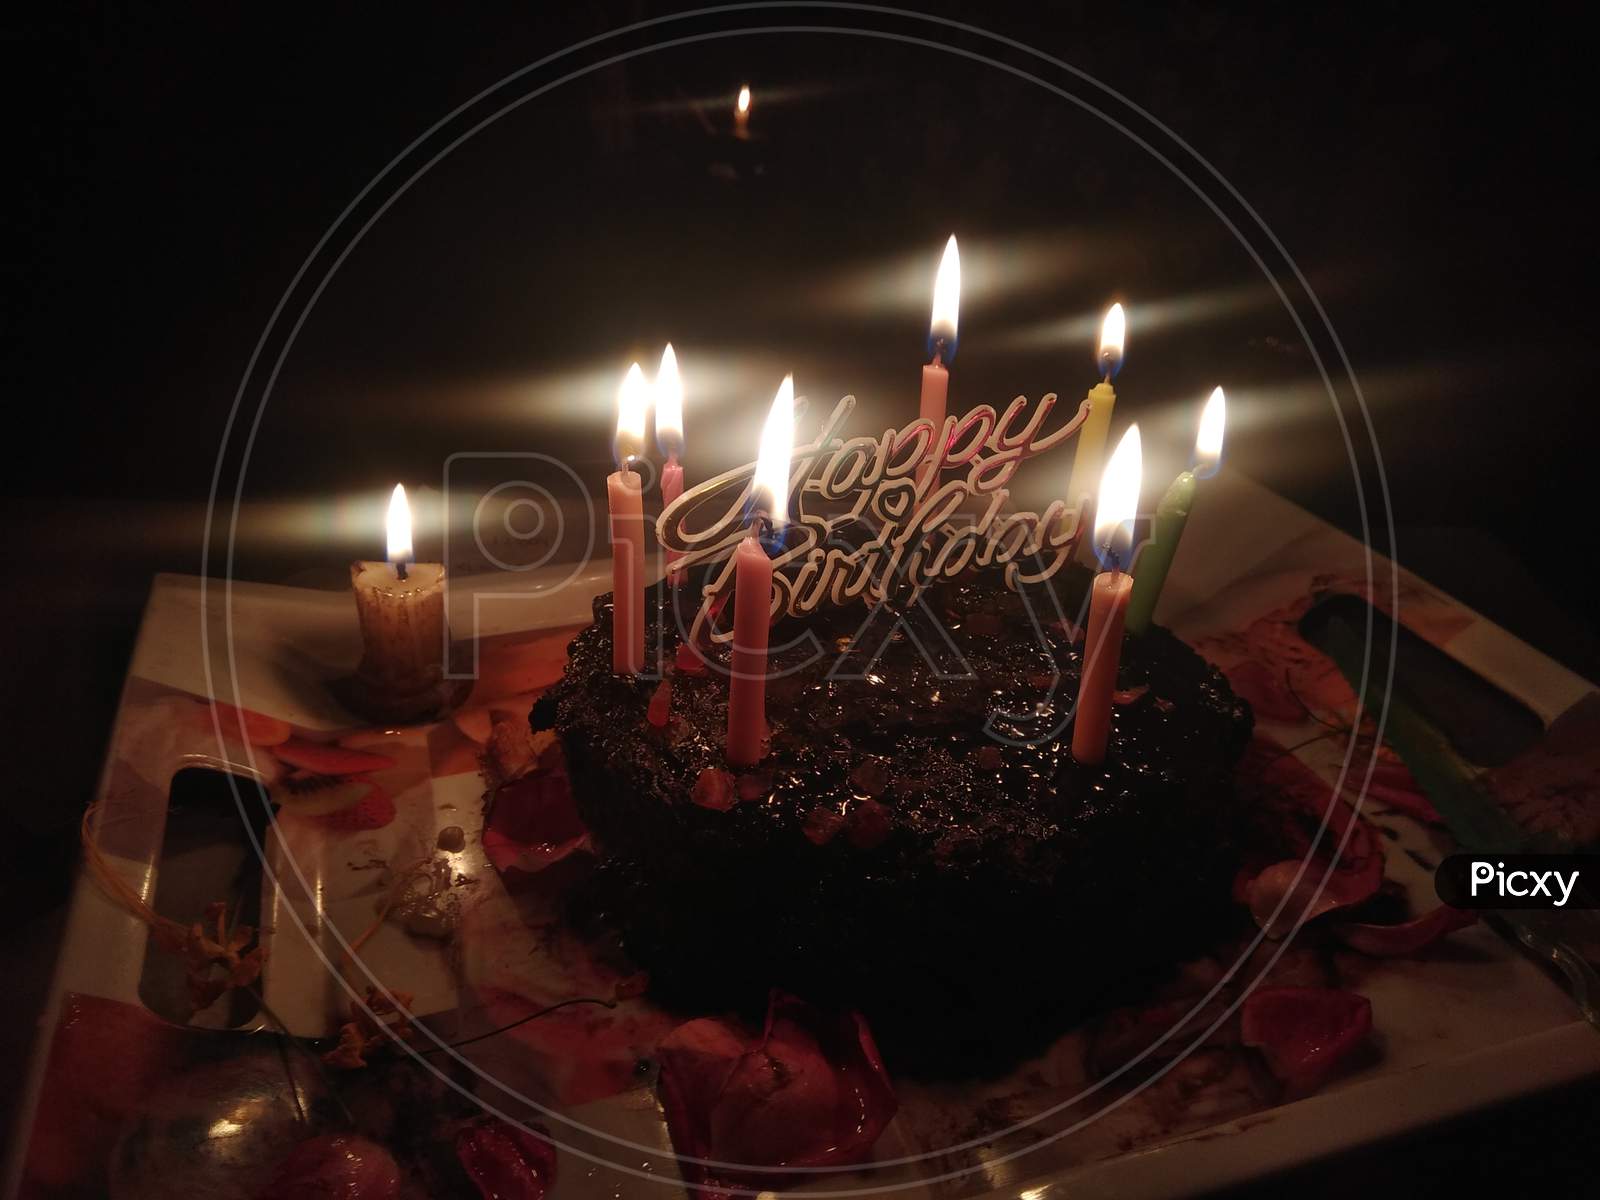 Chocolate cake for birthday celebration